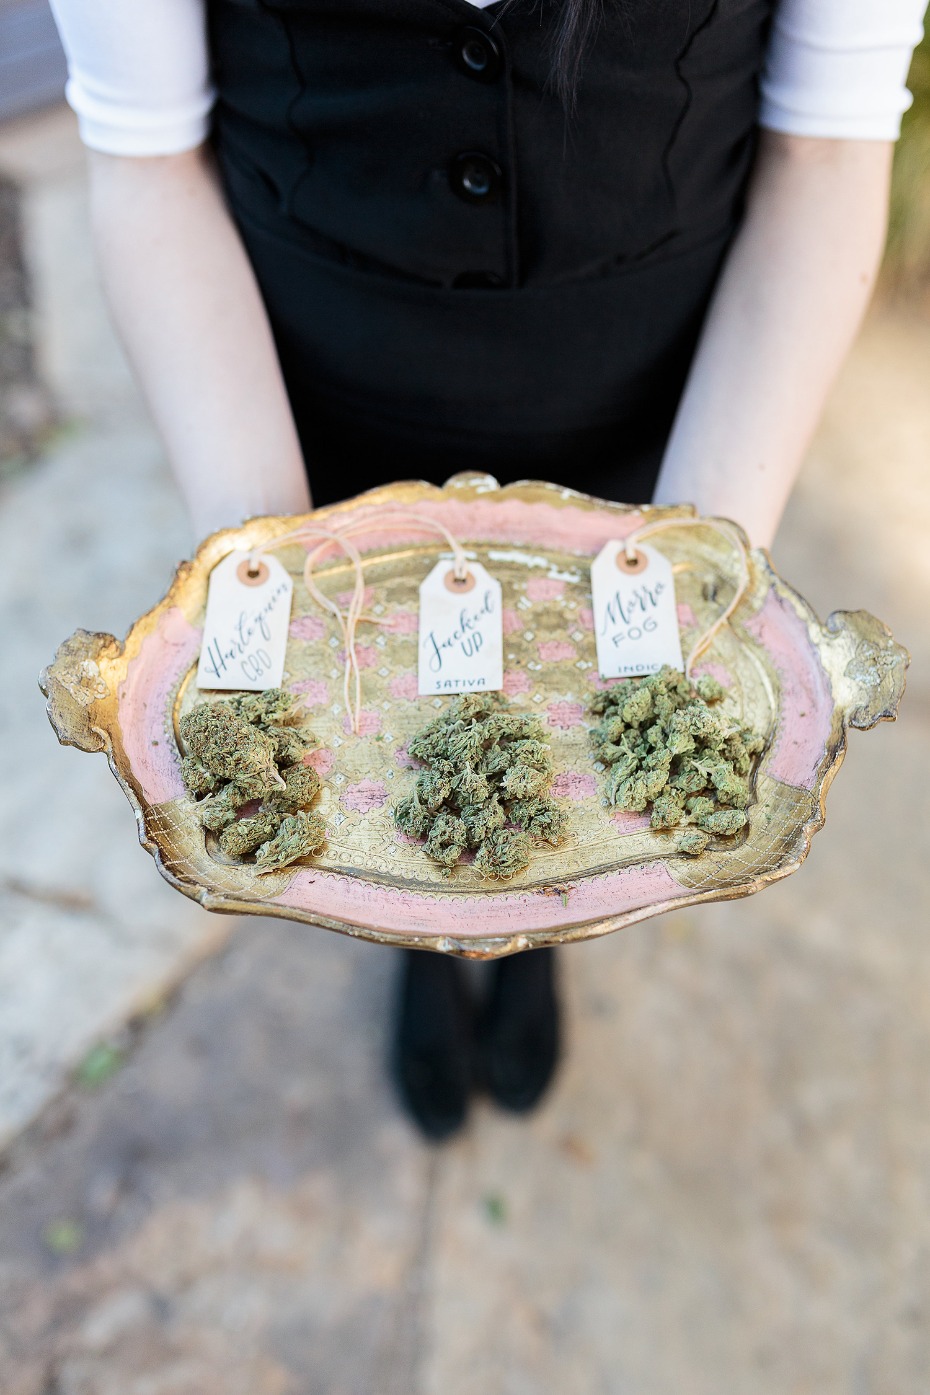 Cannabis infused wedding ideas